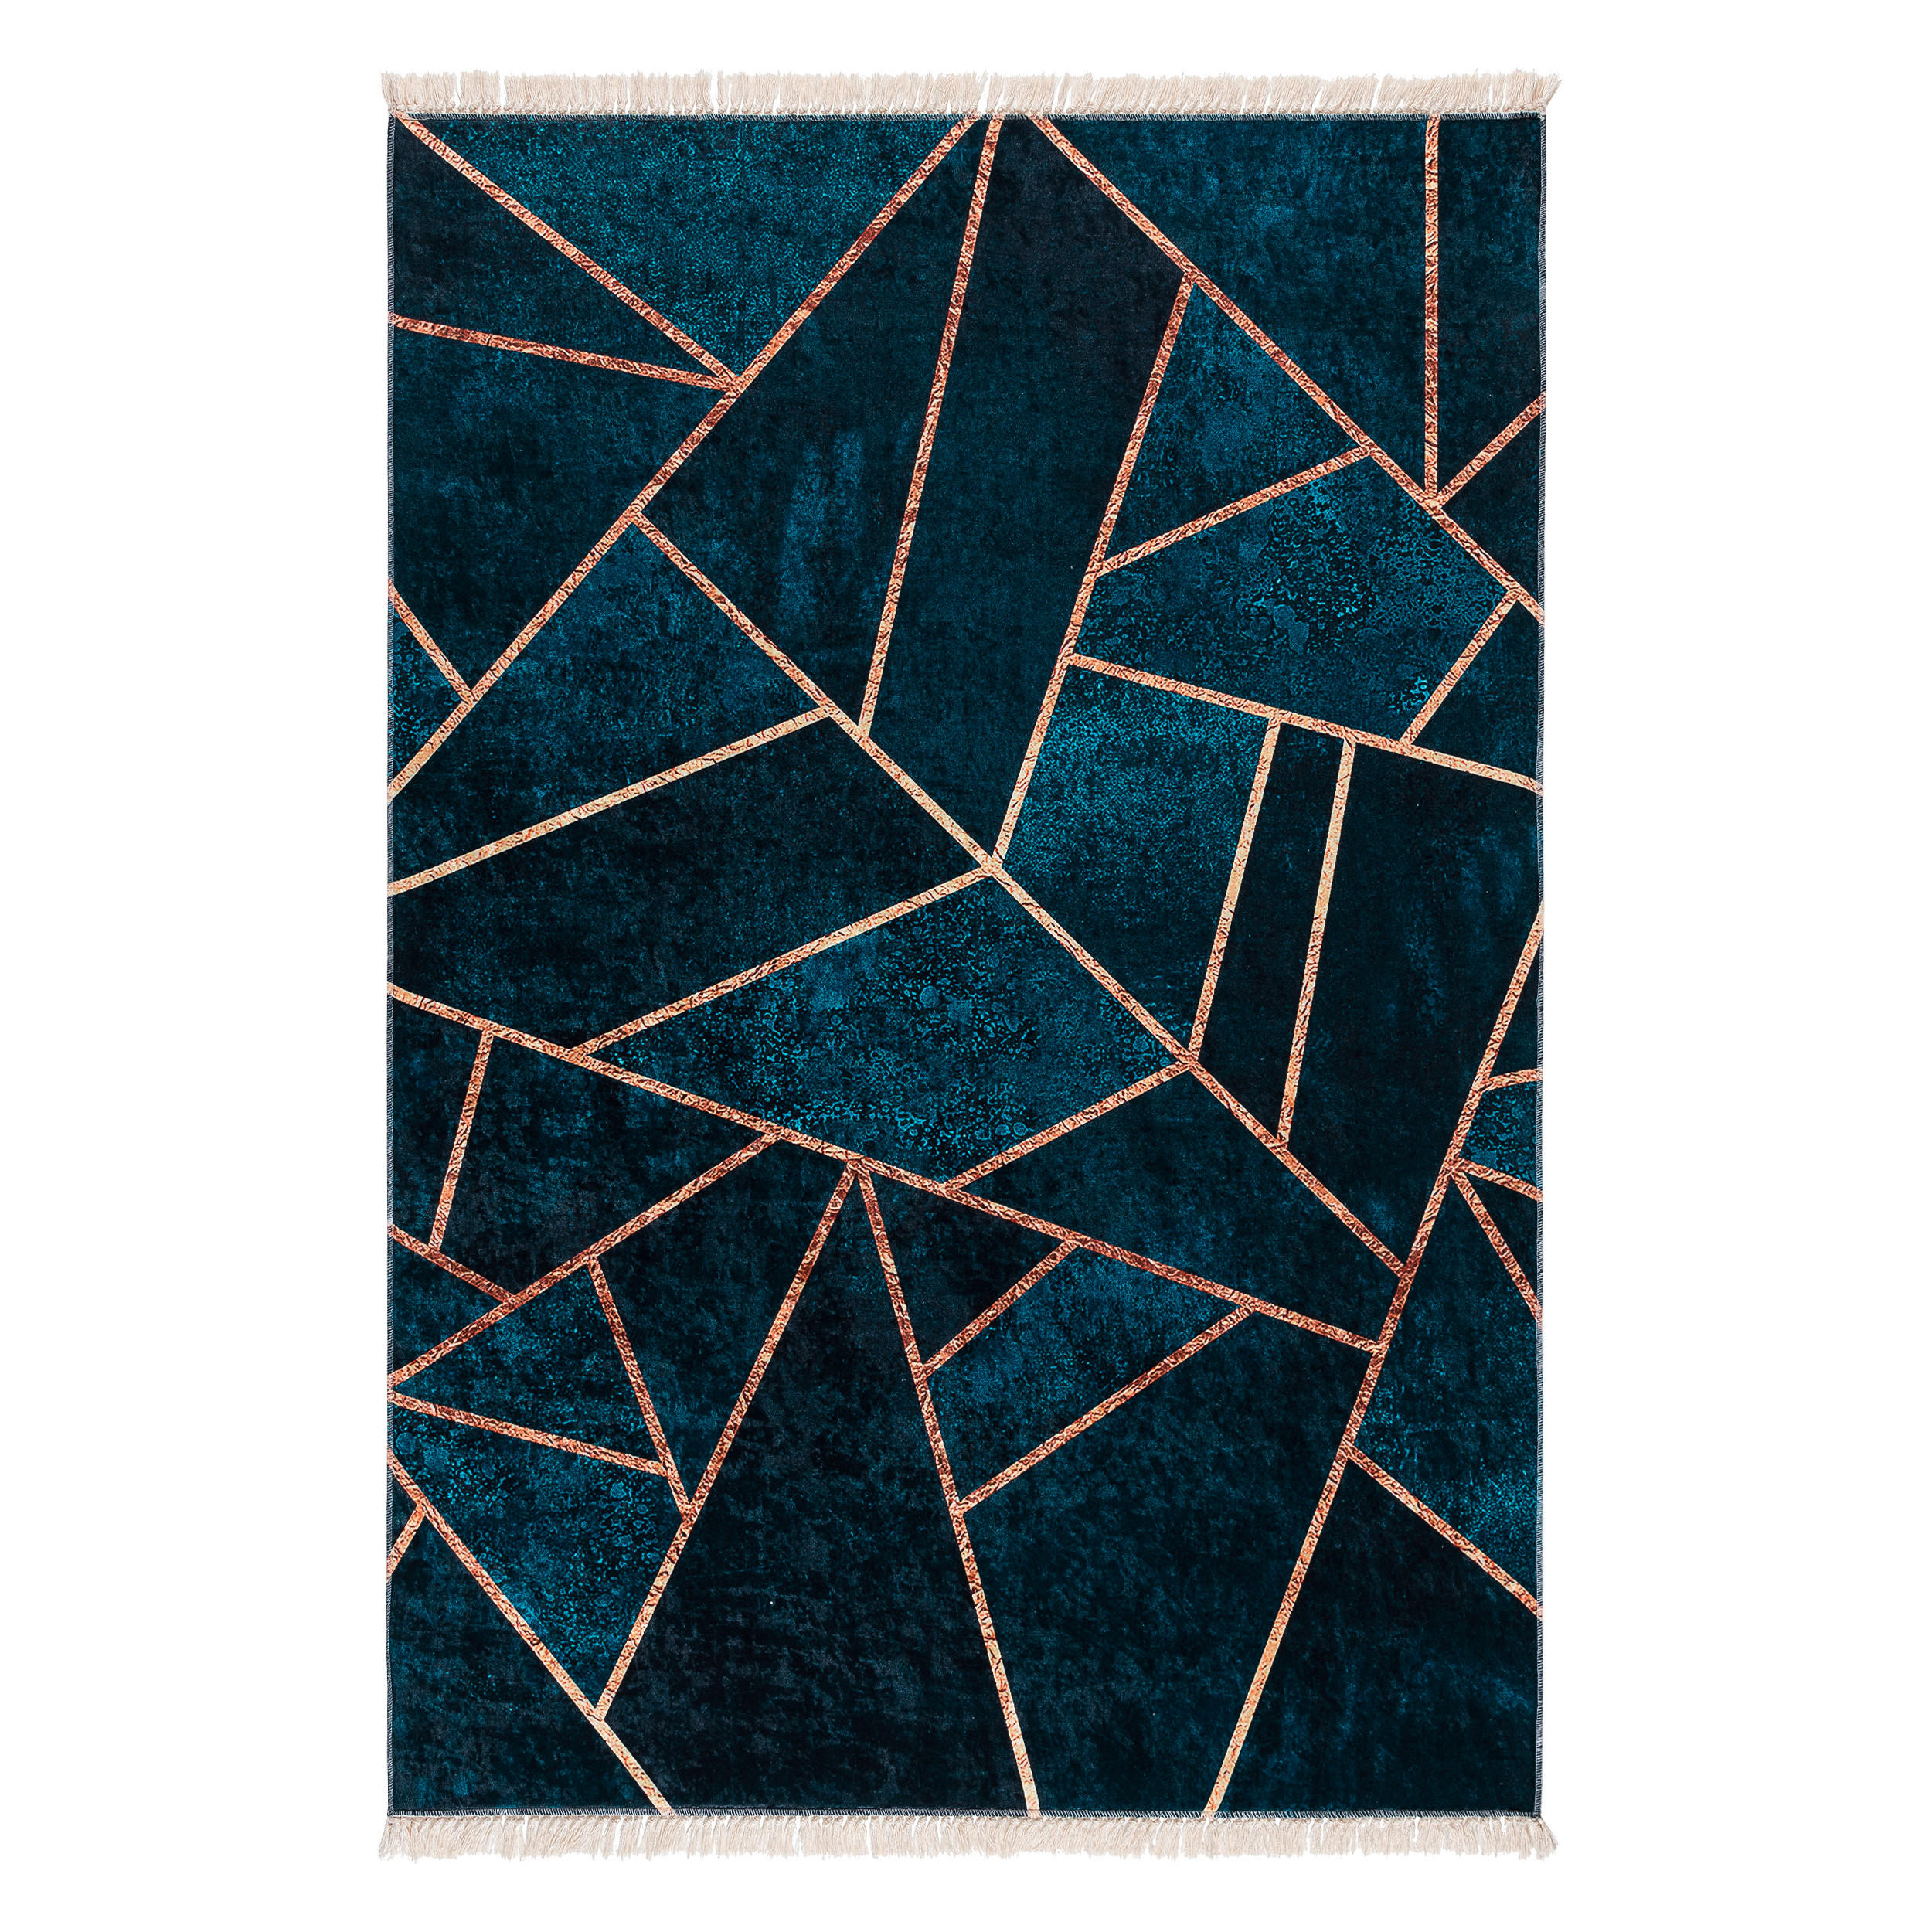 Webteppich Geomatric Abstract  80/150 cm  Goldfarben, Dunkelblau   - Goldfarben/Dunkelblau, MODERN, Kunststoff/Textil (80/150cm)